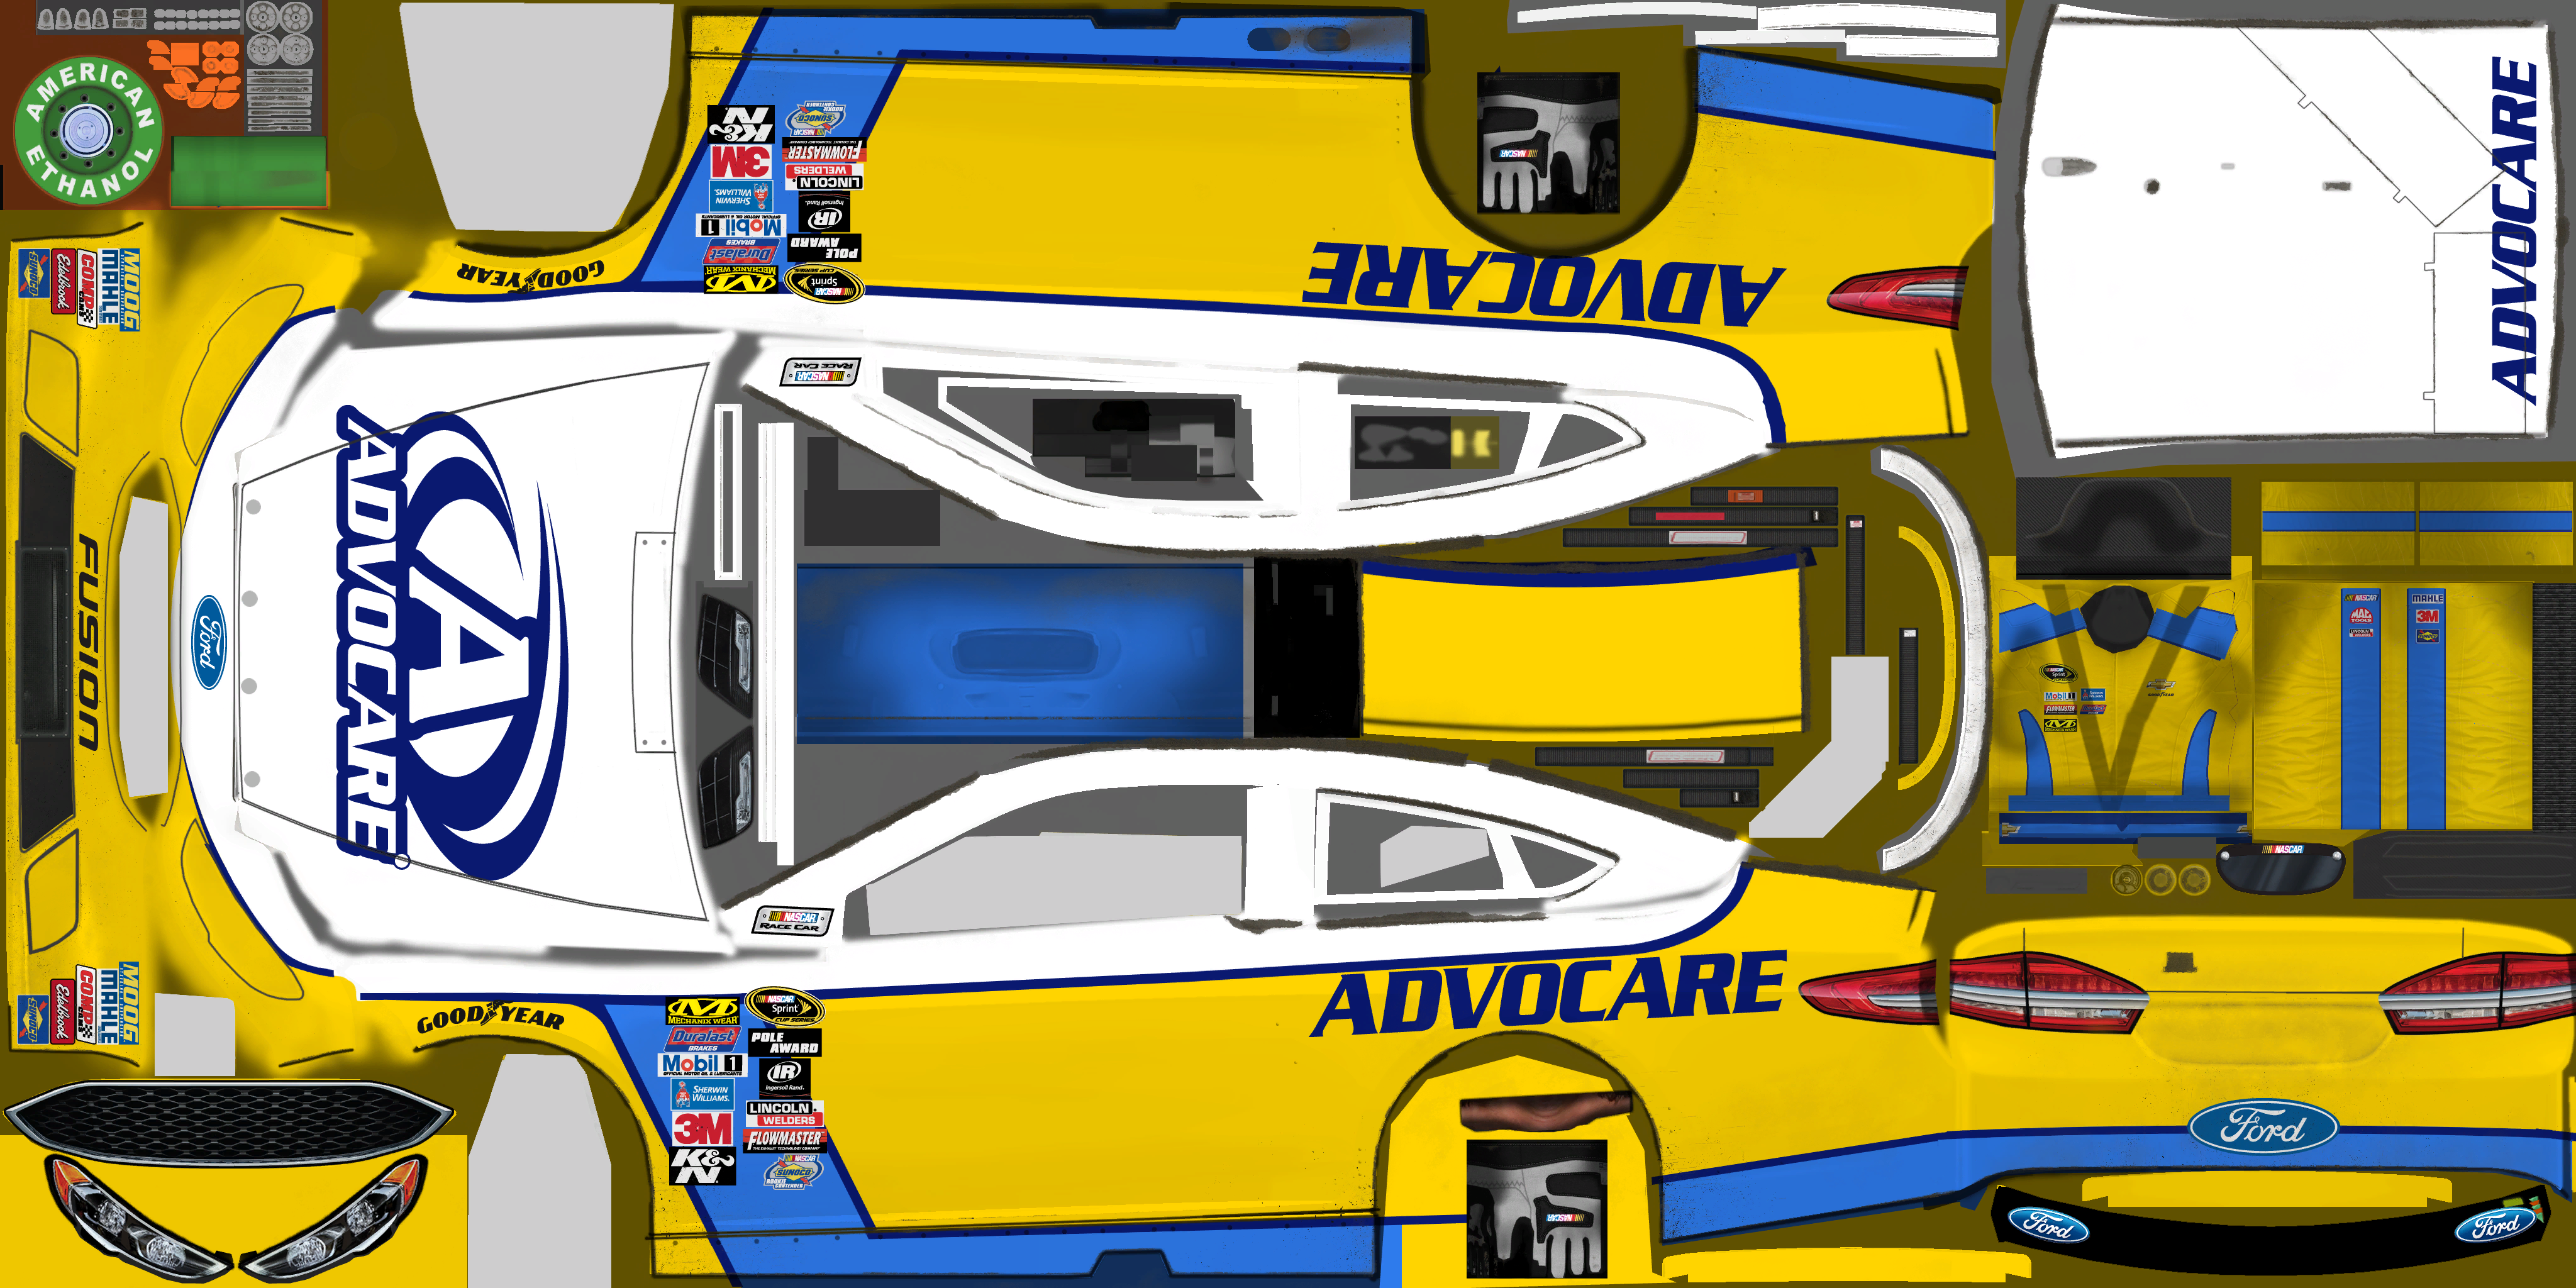 NASCAR Heat Evolution - Contract 8: AdvoCare Ford